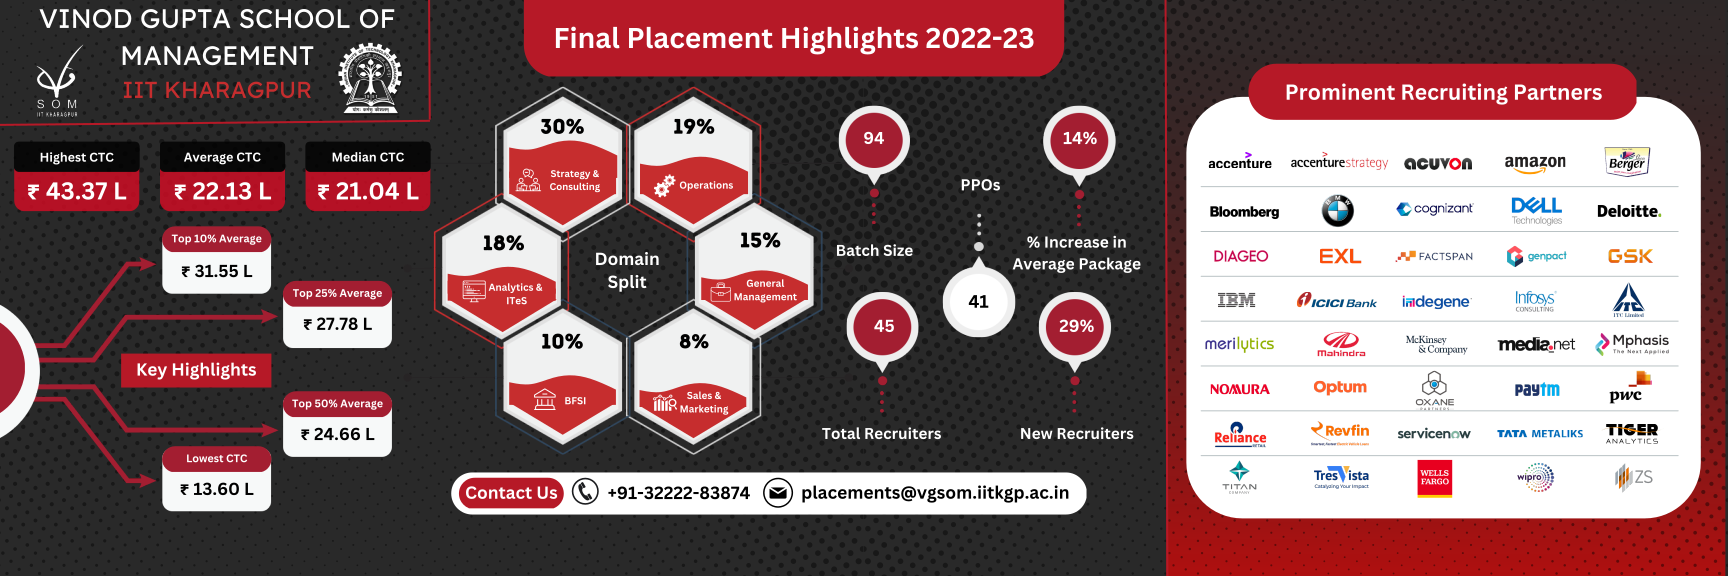 Final Placement Highlights 2021-22